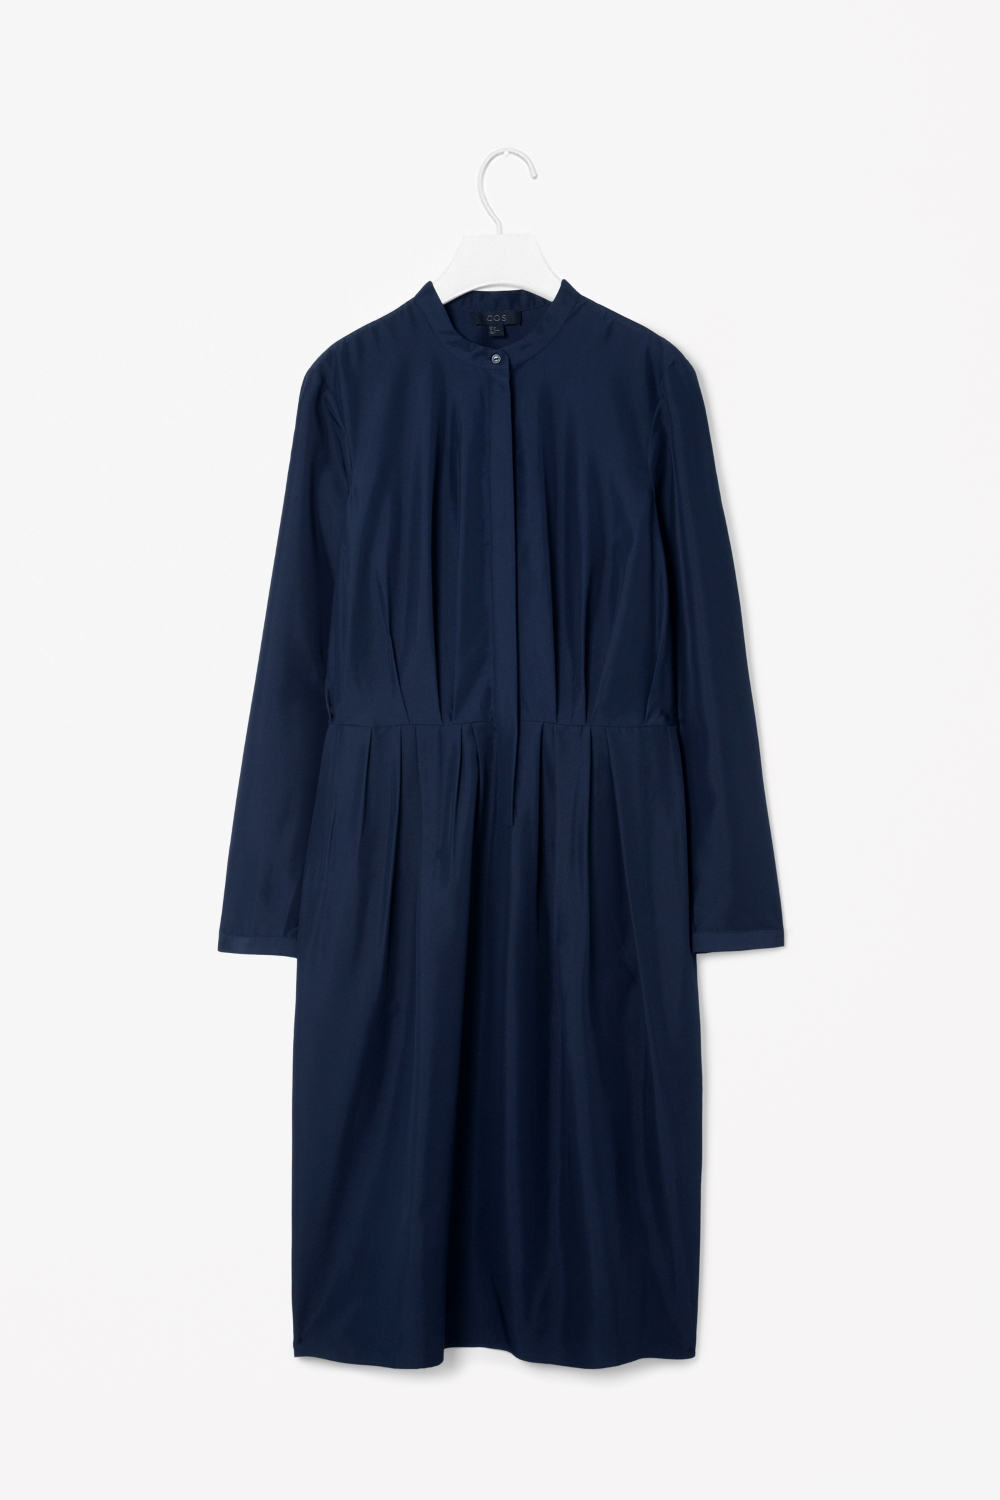 Cos Pleated Waist Shirt Dress in Blue (Navy) | Lyst